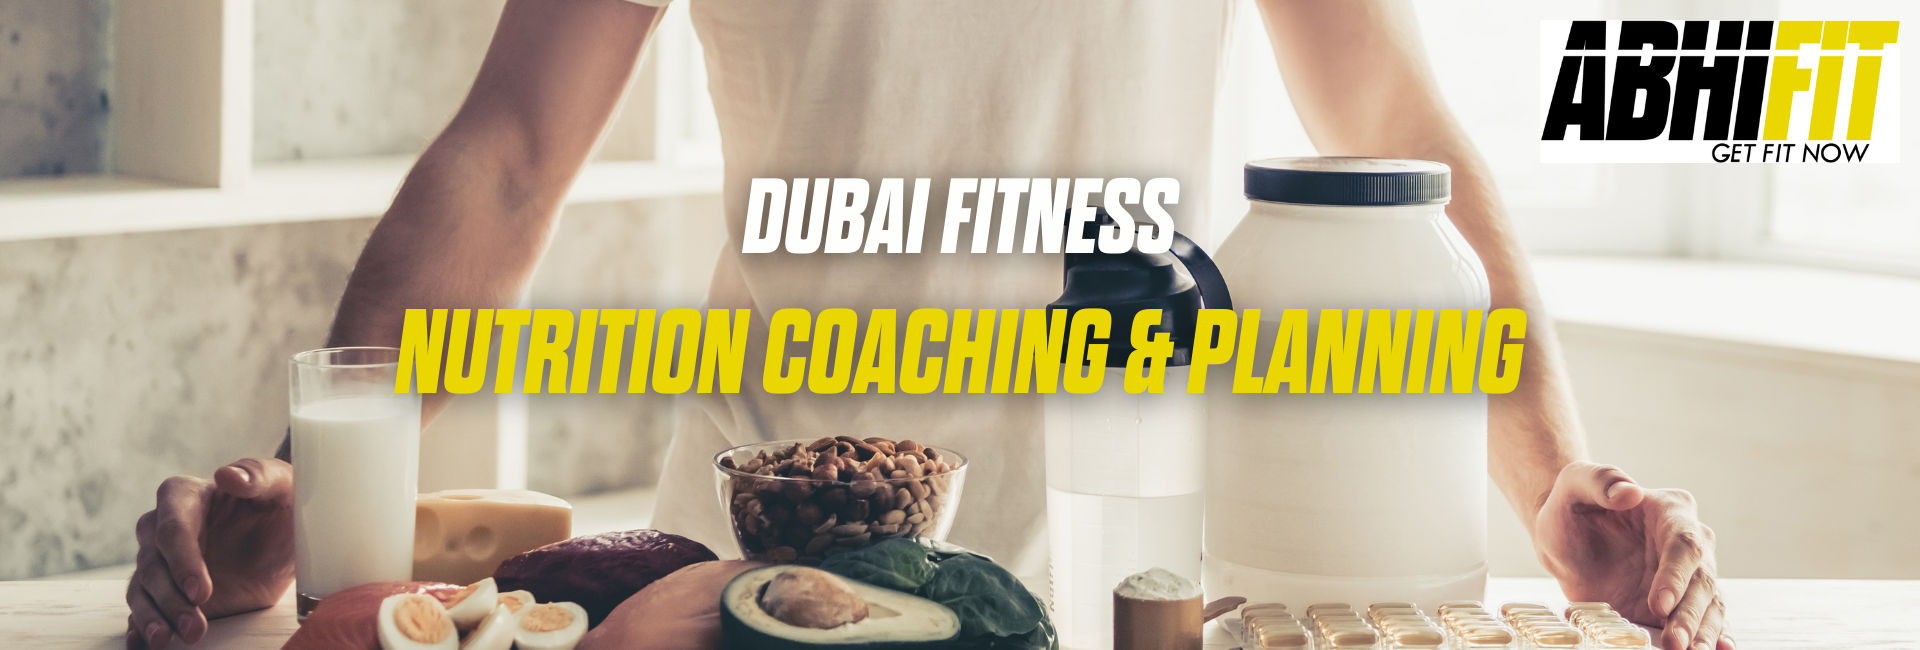 Top Nutritionist in Dubai - Award Winning Personal Trainer of Dubai UAE Abhinav Malhotra